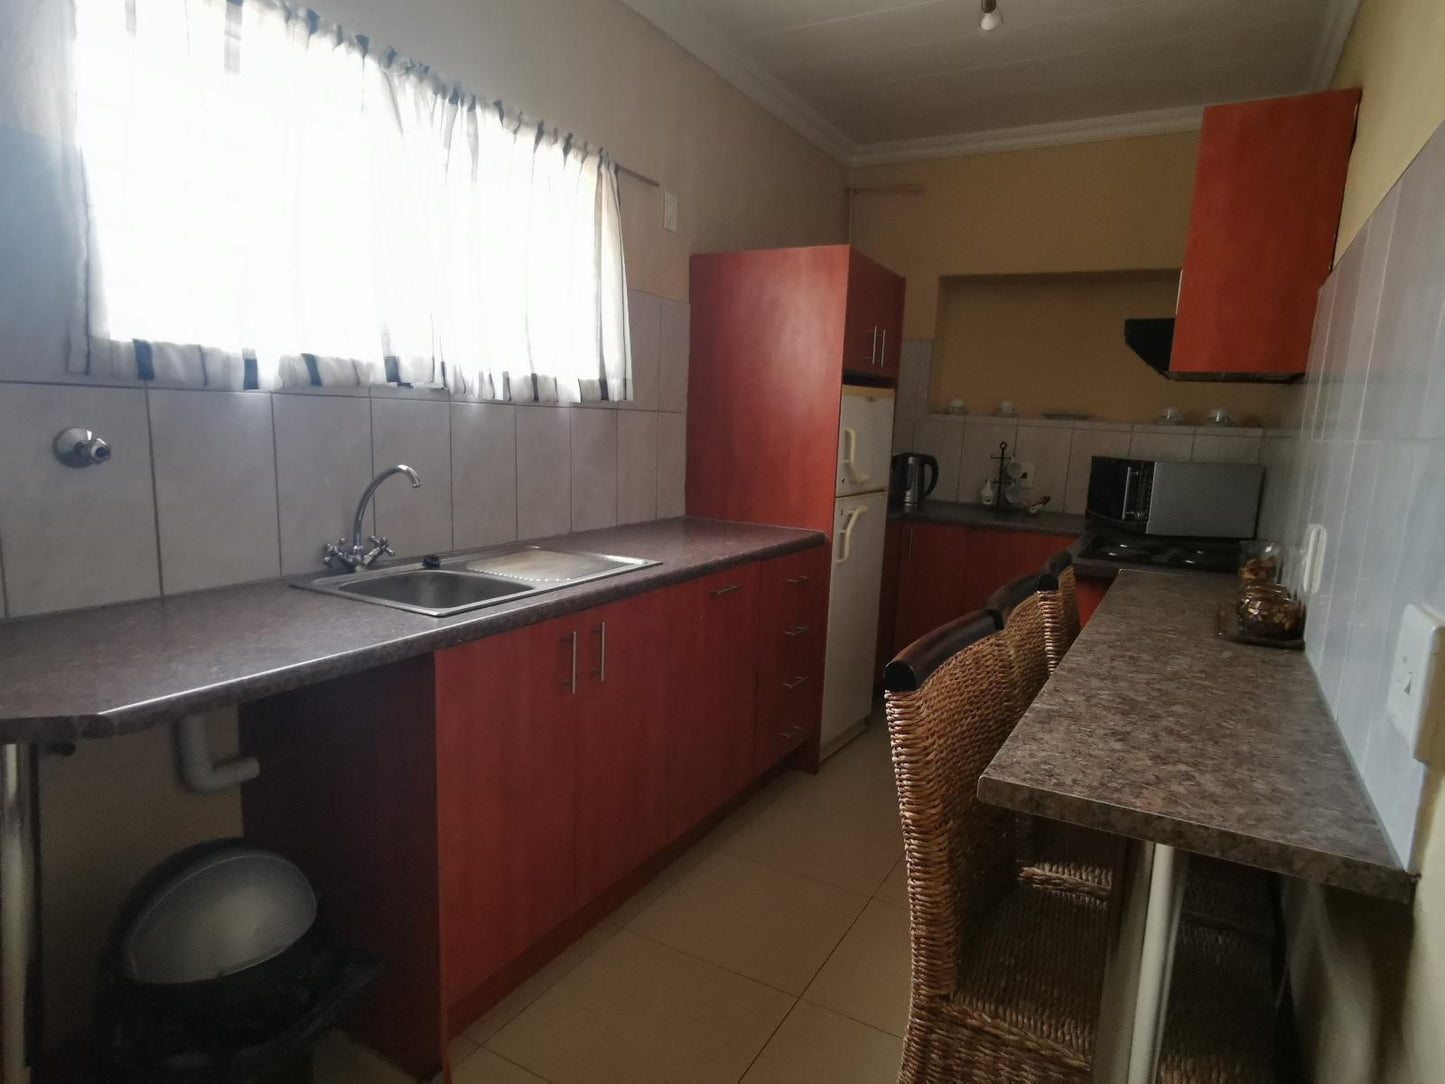 Aquila Guest House Waterkloof Ridge Pretoria Tshwane Gauteng South Africa Kitchen